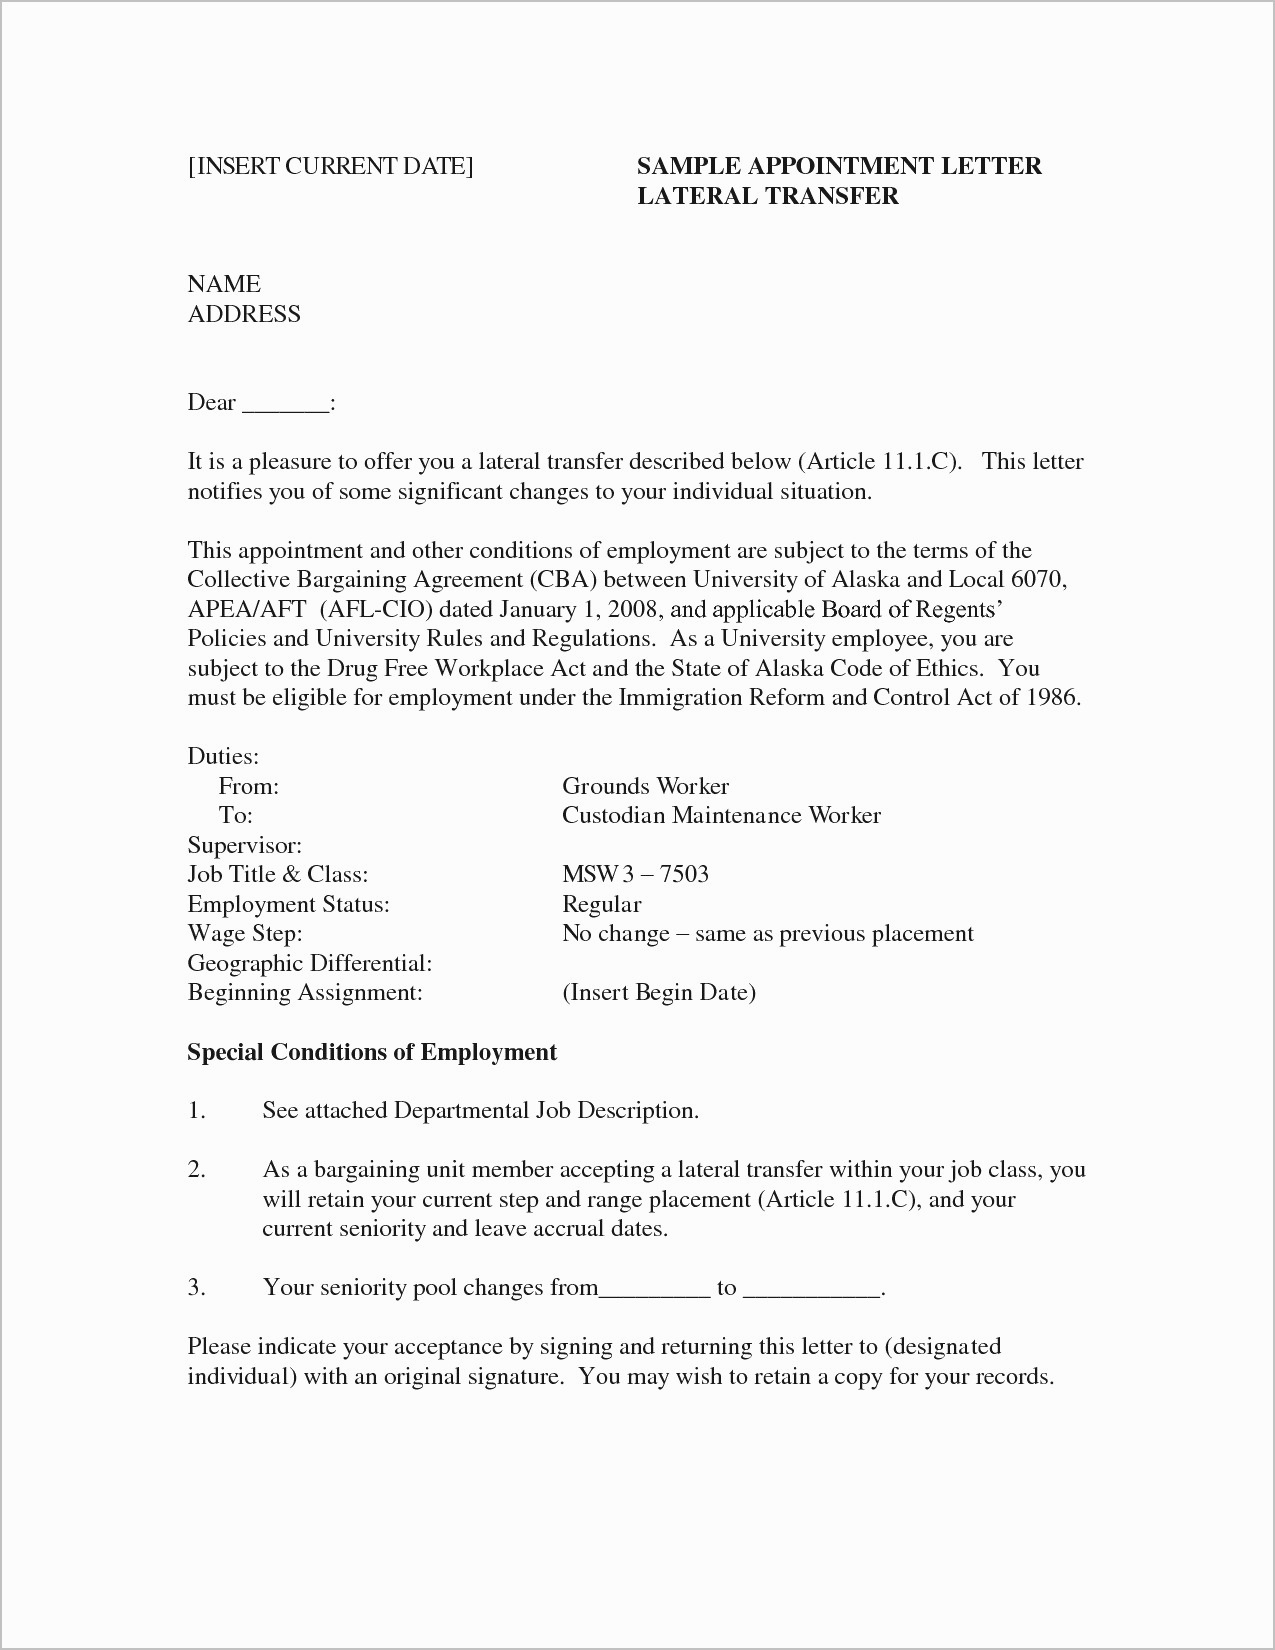 Conditional Offer Of Employment Letter Template - Letter Accept Job Fer Best 29 Unique Gallery Job Fer Letter for